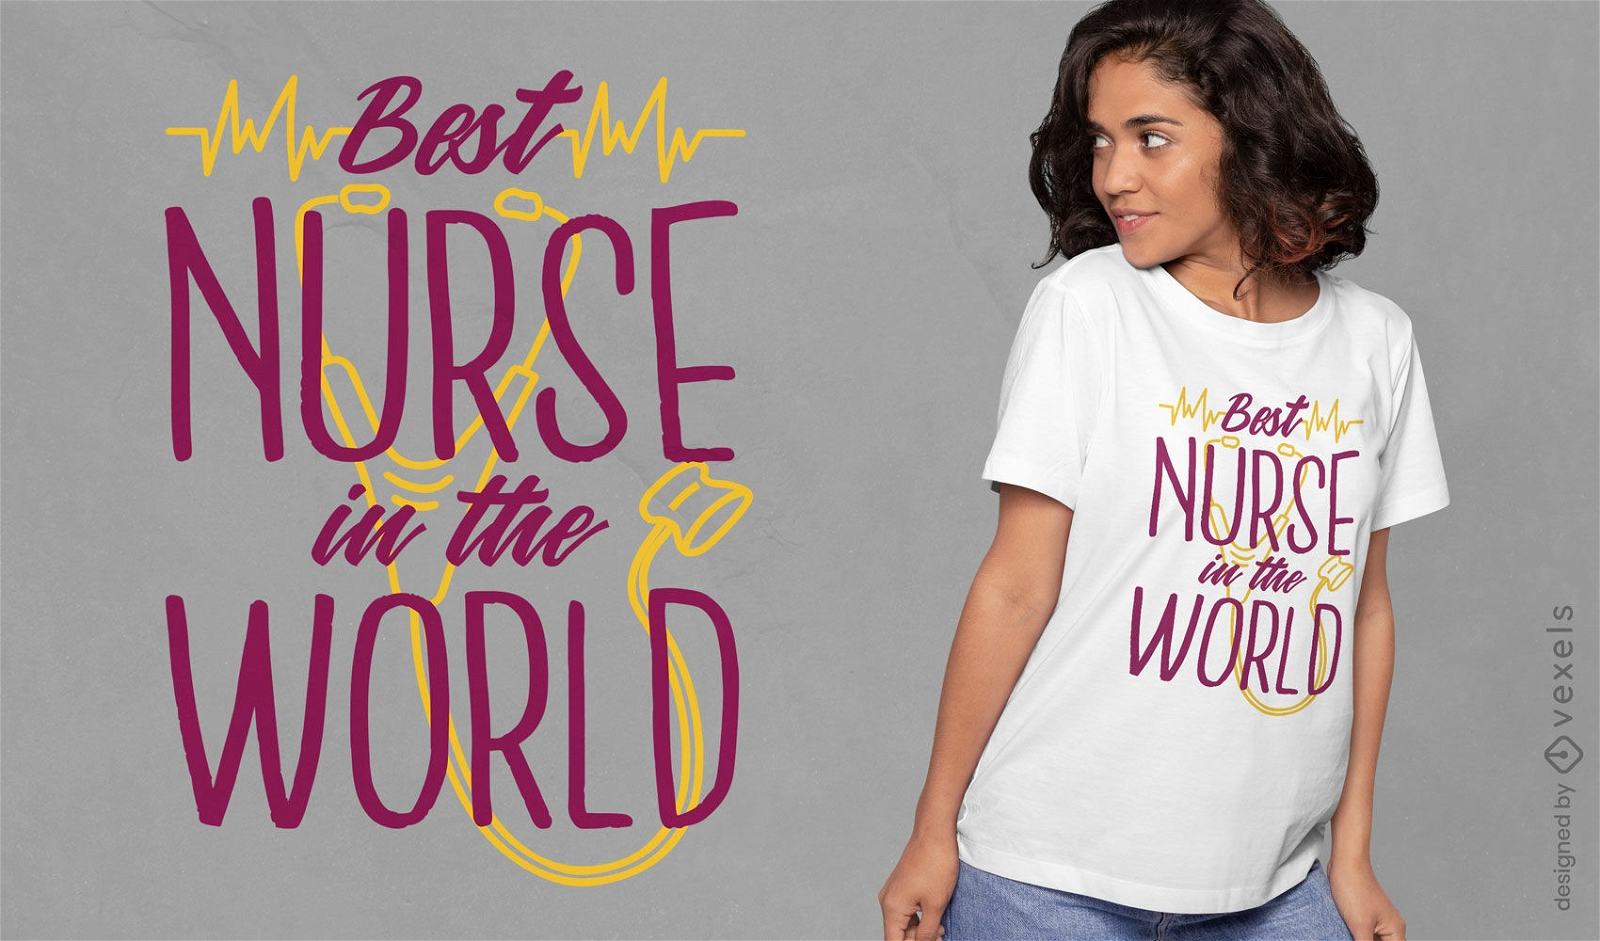 Healthcare nurse quote t-shirt design